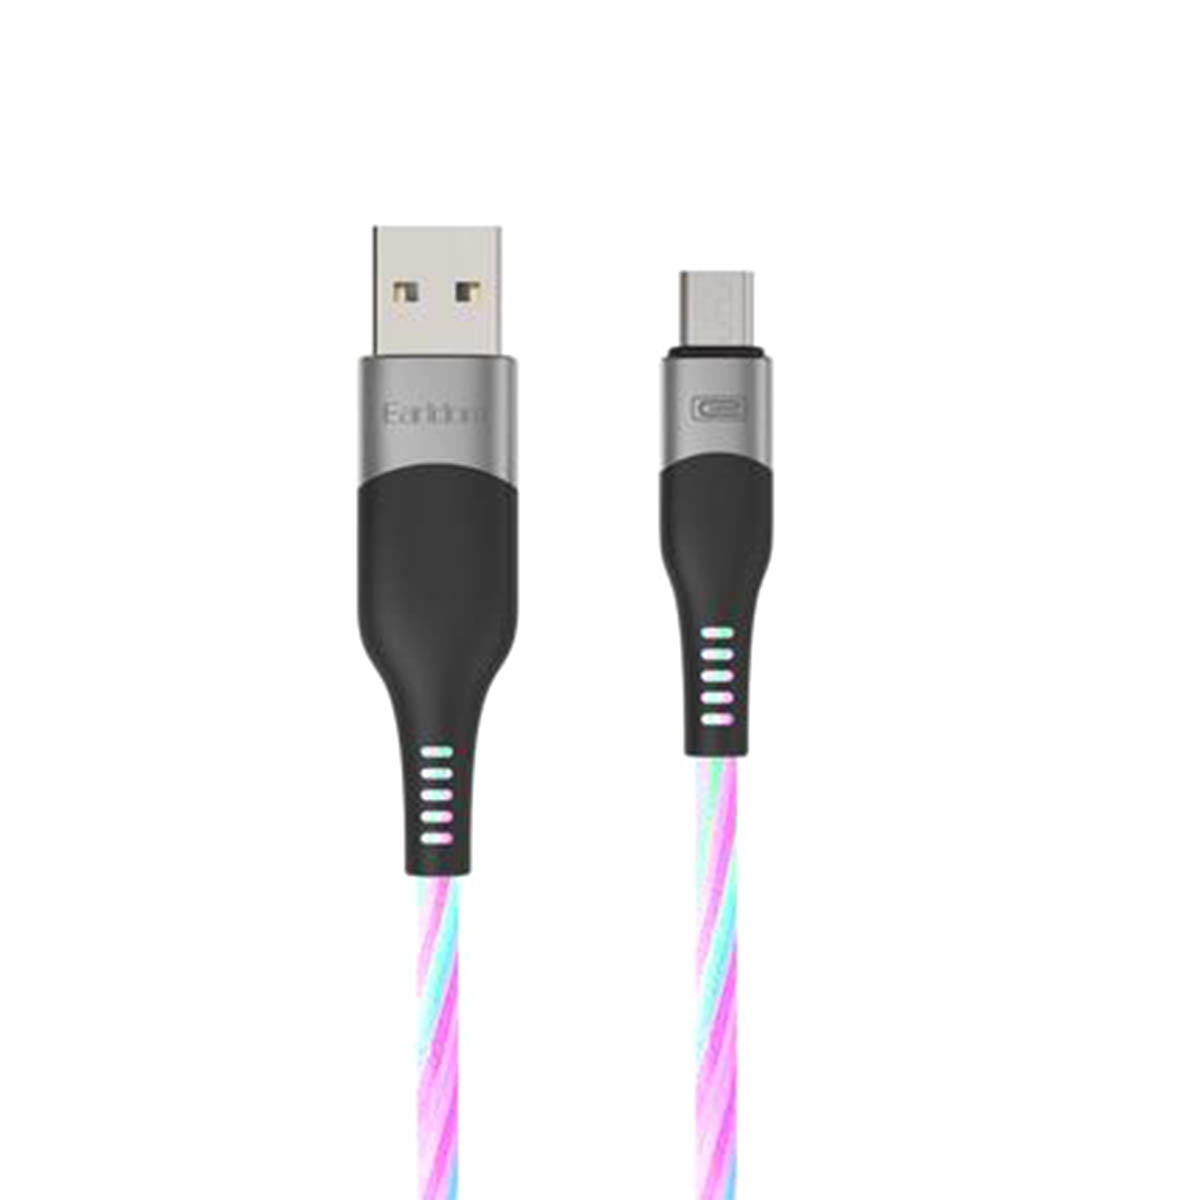 Кабель с подсветкой Earldom EC-096M USB Micro USB, 2.4А, длина 1 метр, силикон, цвет голубой